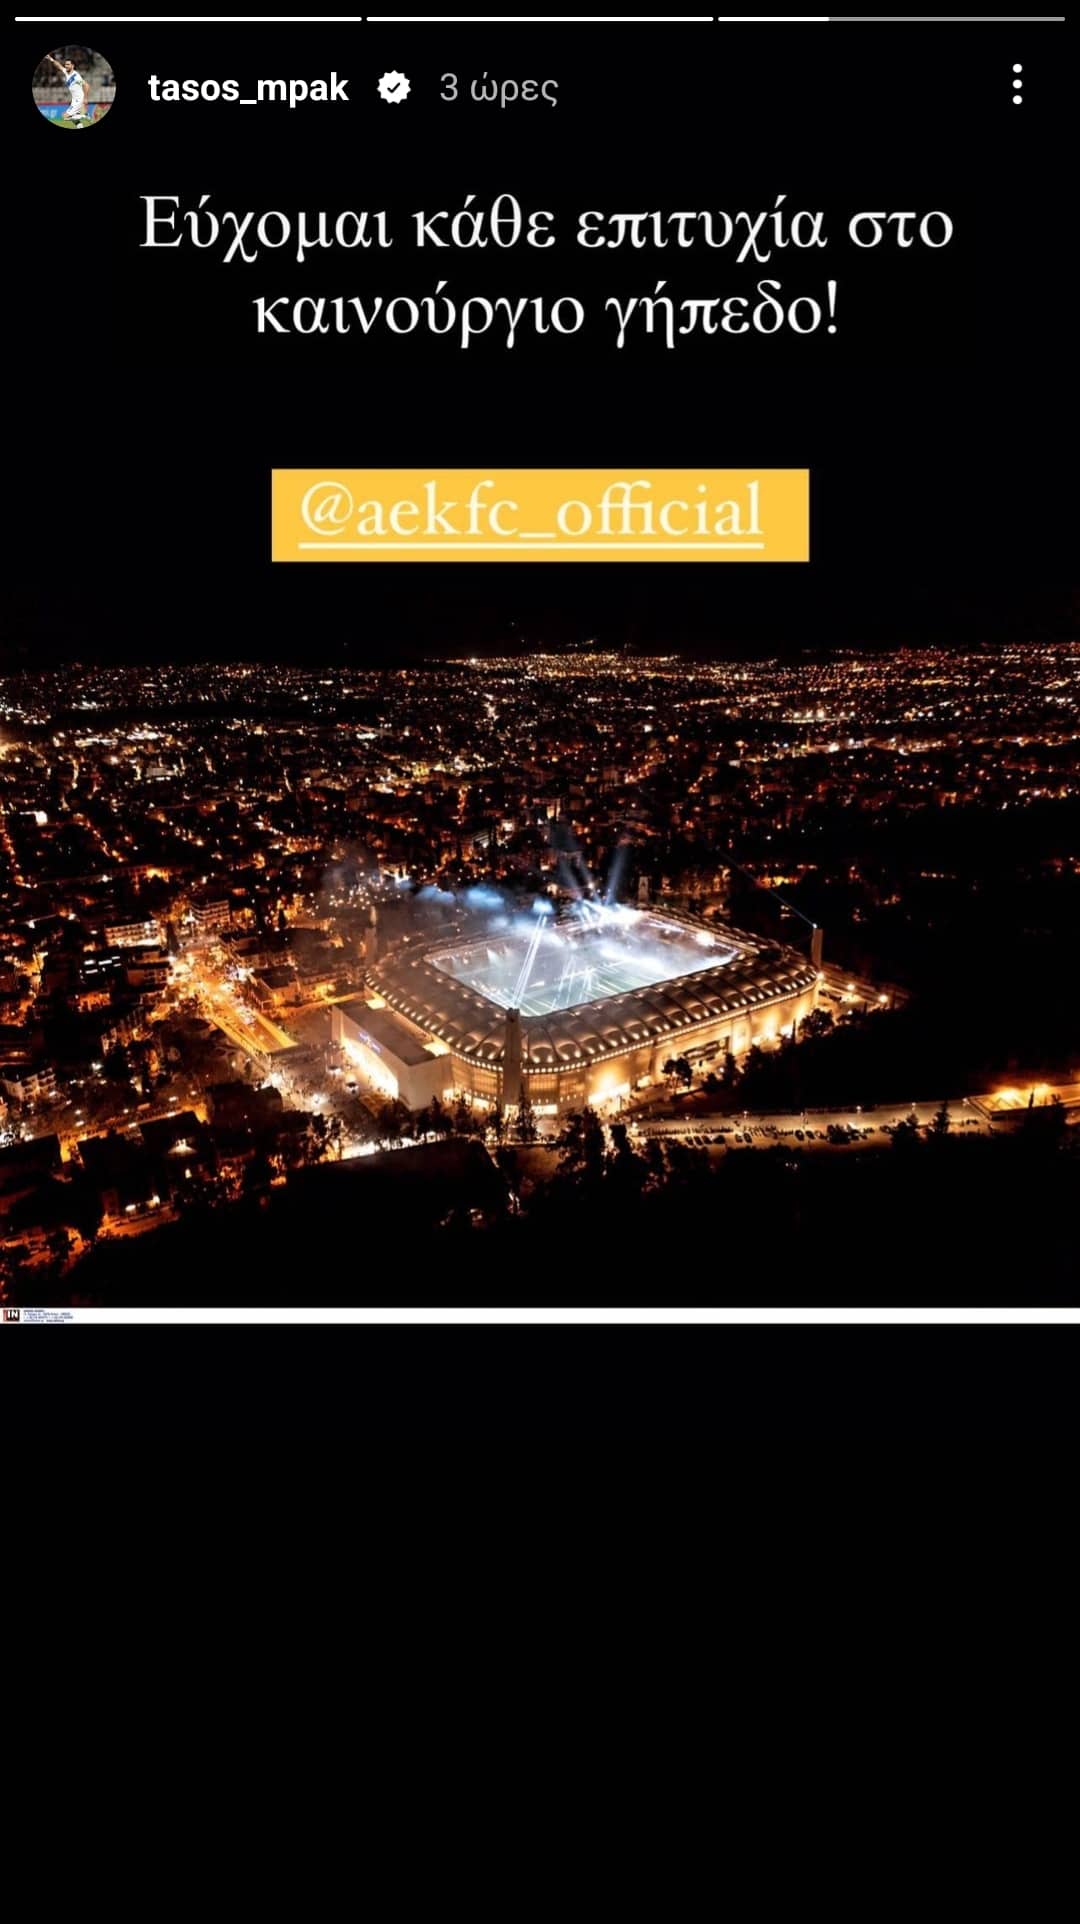 AEK: Οι ευχές του Μπακασέτα για το νέο γήπεδο